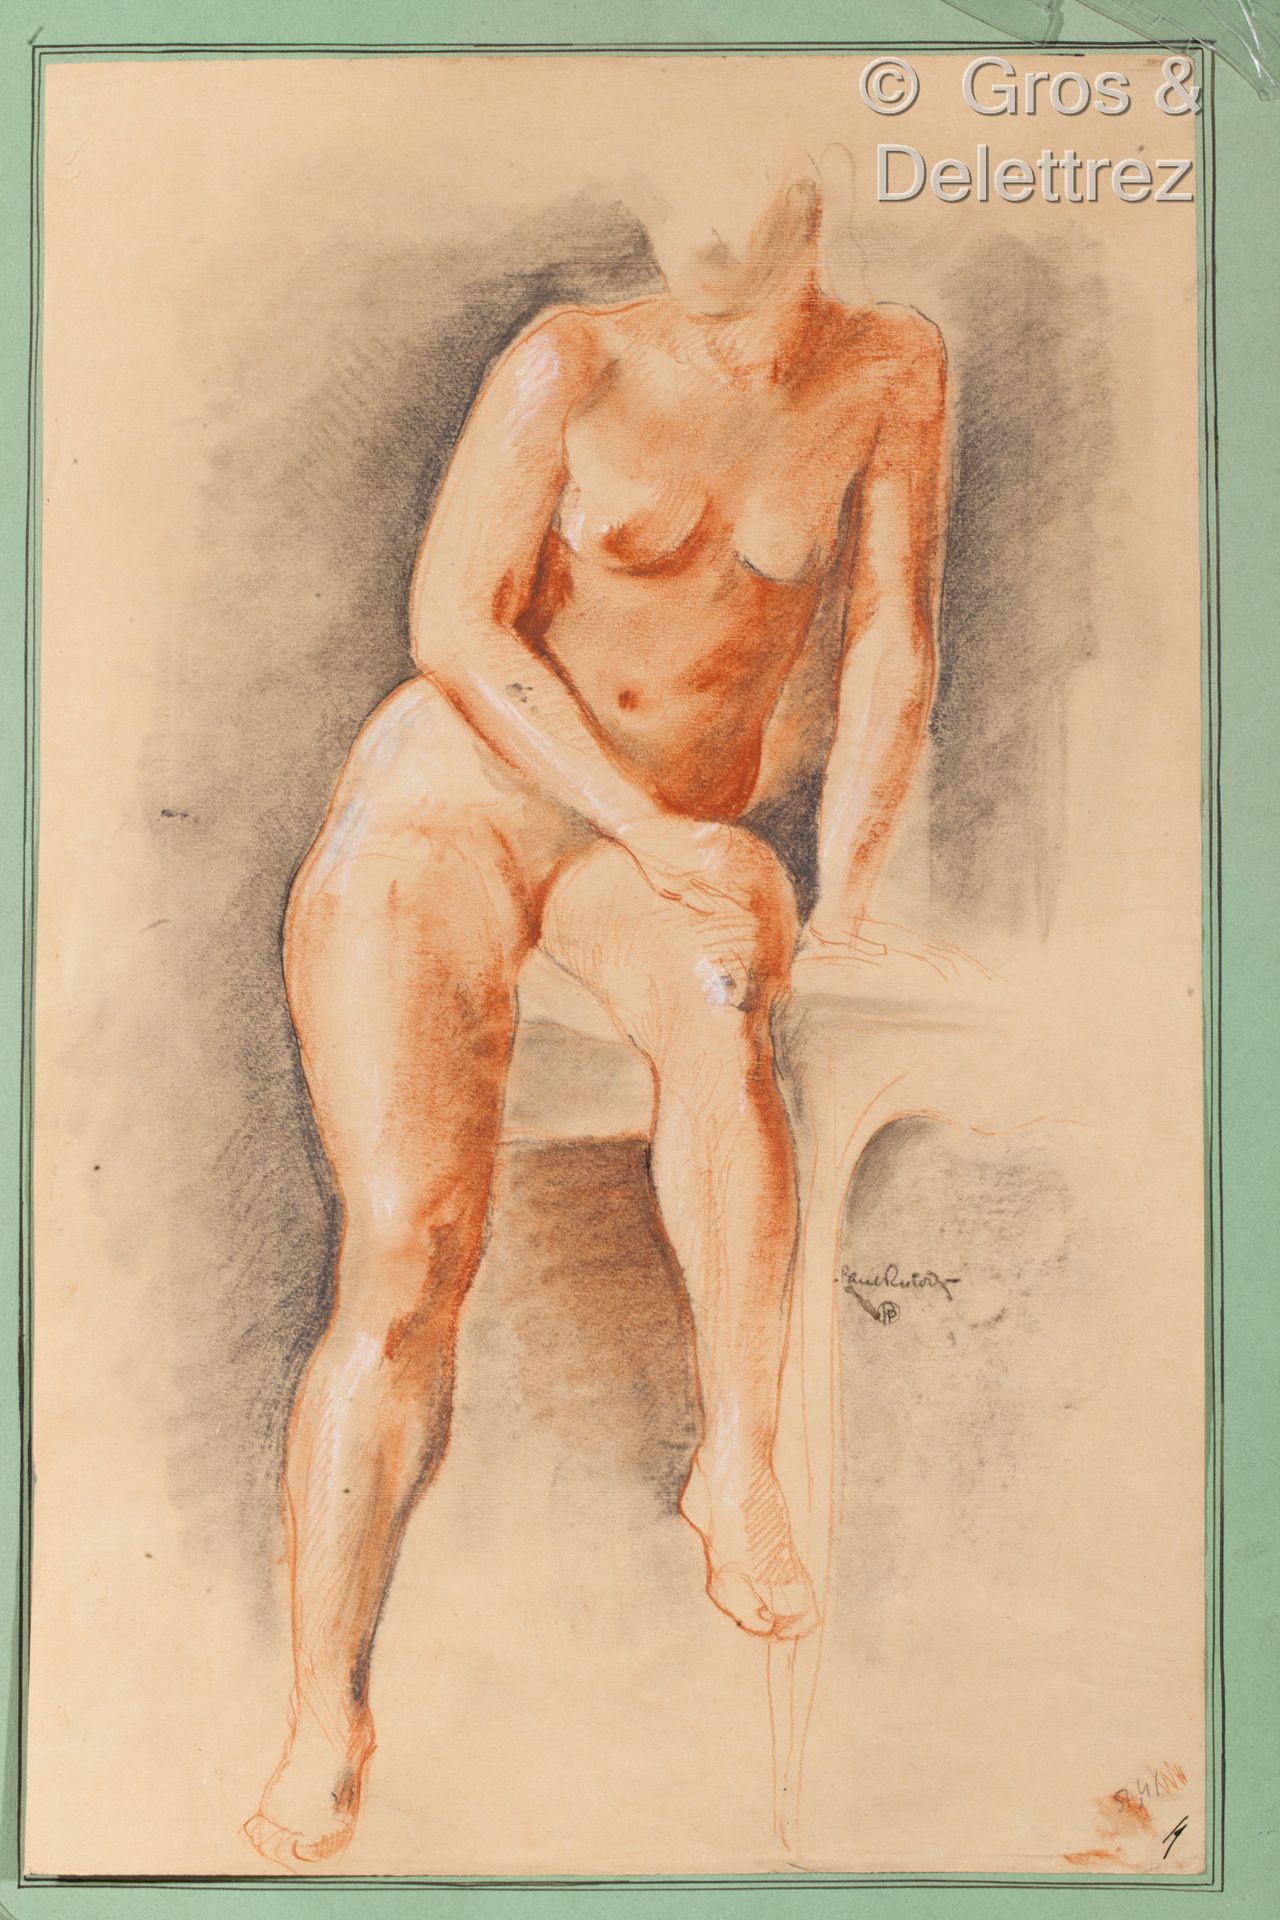 Null (E) 保罗-普托伊斯(1912-1990)

裸体坐姿

红色粉笔和白色粉笔

右下方有签名

50 x 32 cm